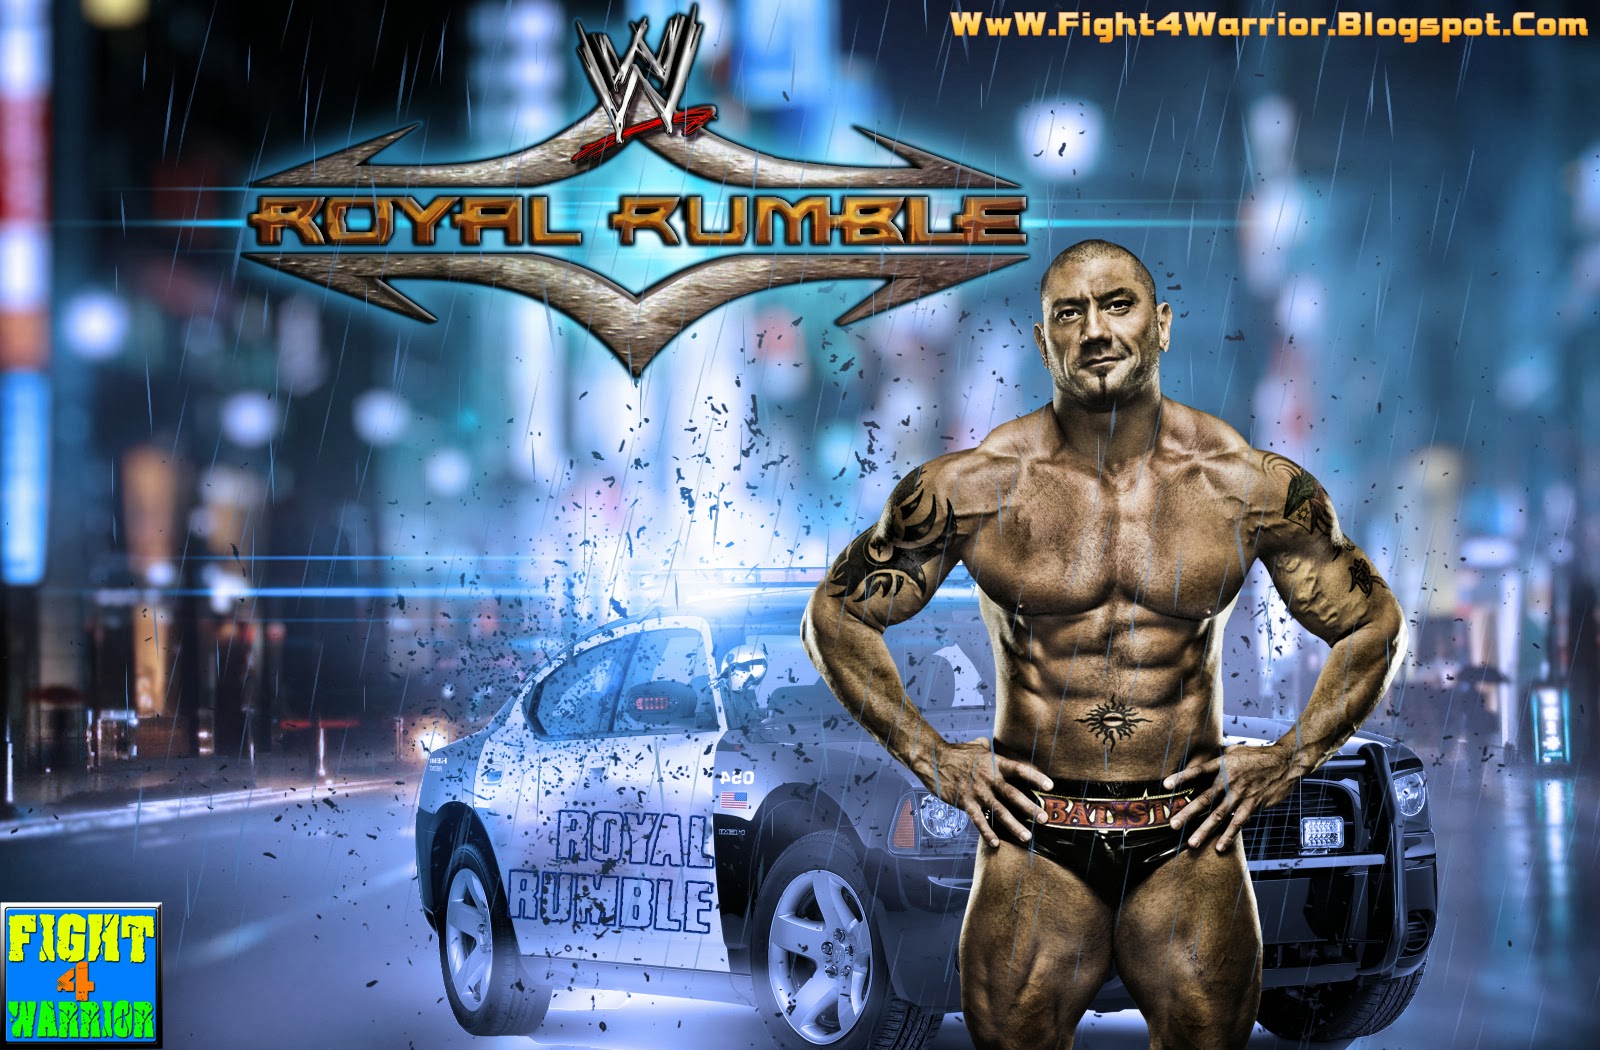 Wwe Royal Rumble 2014 Wallpaper FeatBatista Fight4warrior